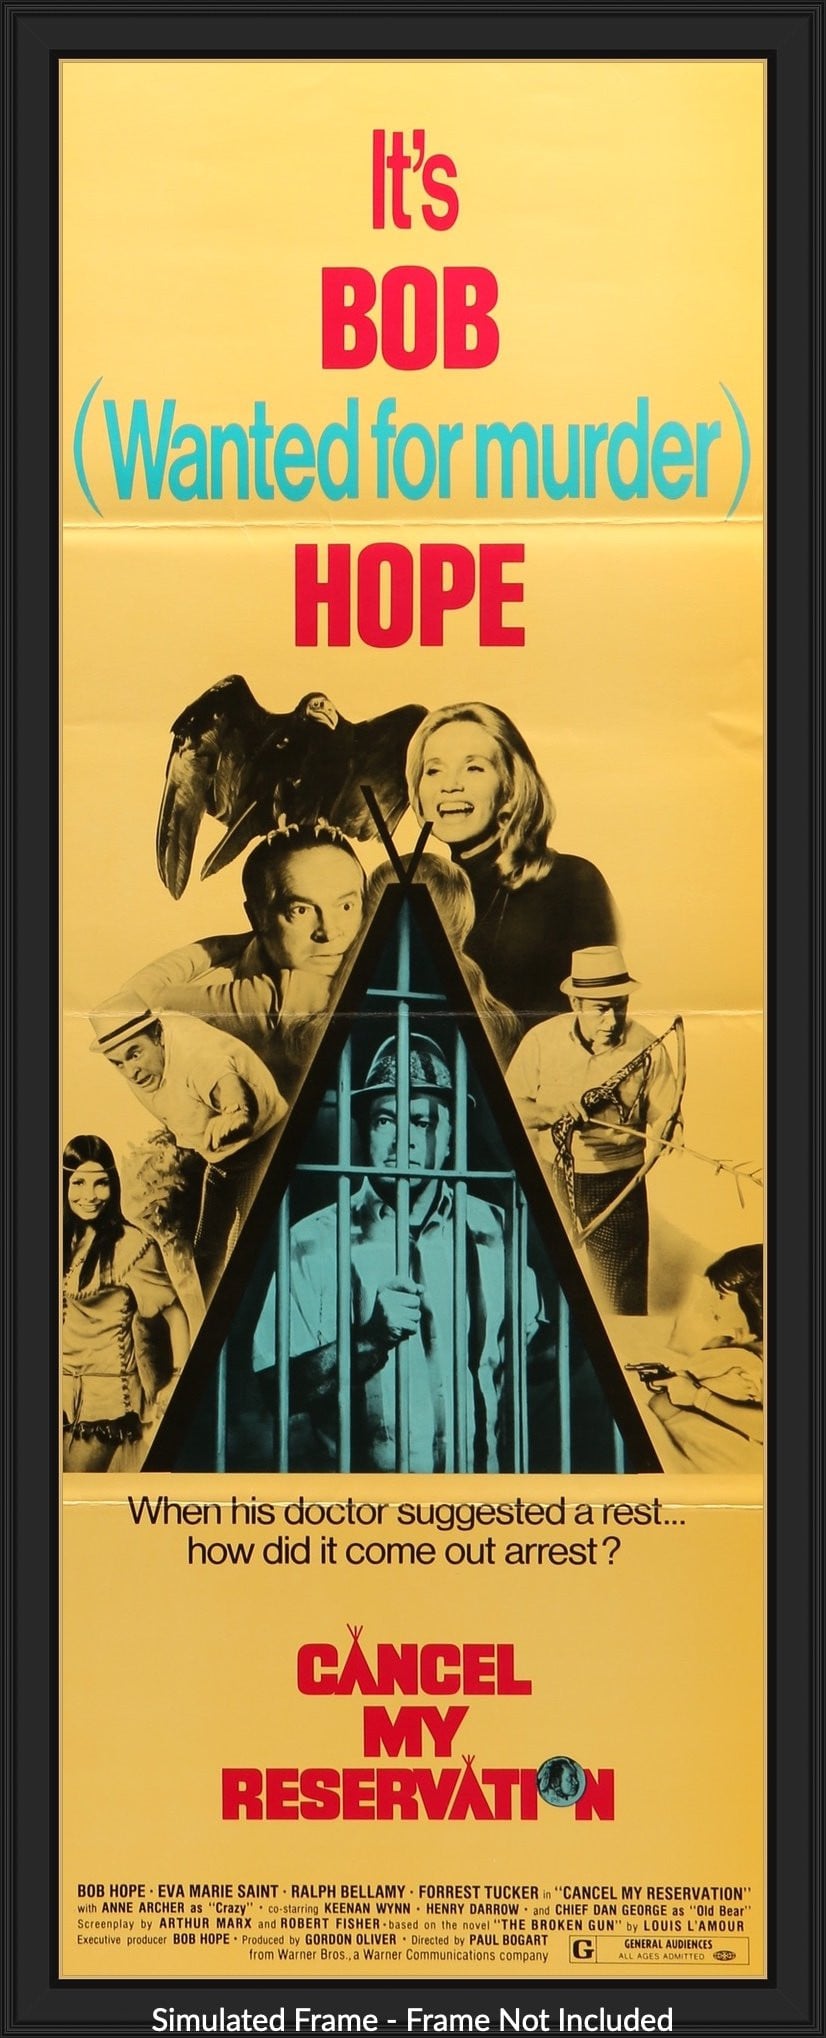 Cancel My Reservation (1972) original movie poster for sale at Original Film Art